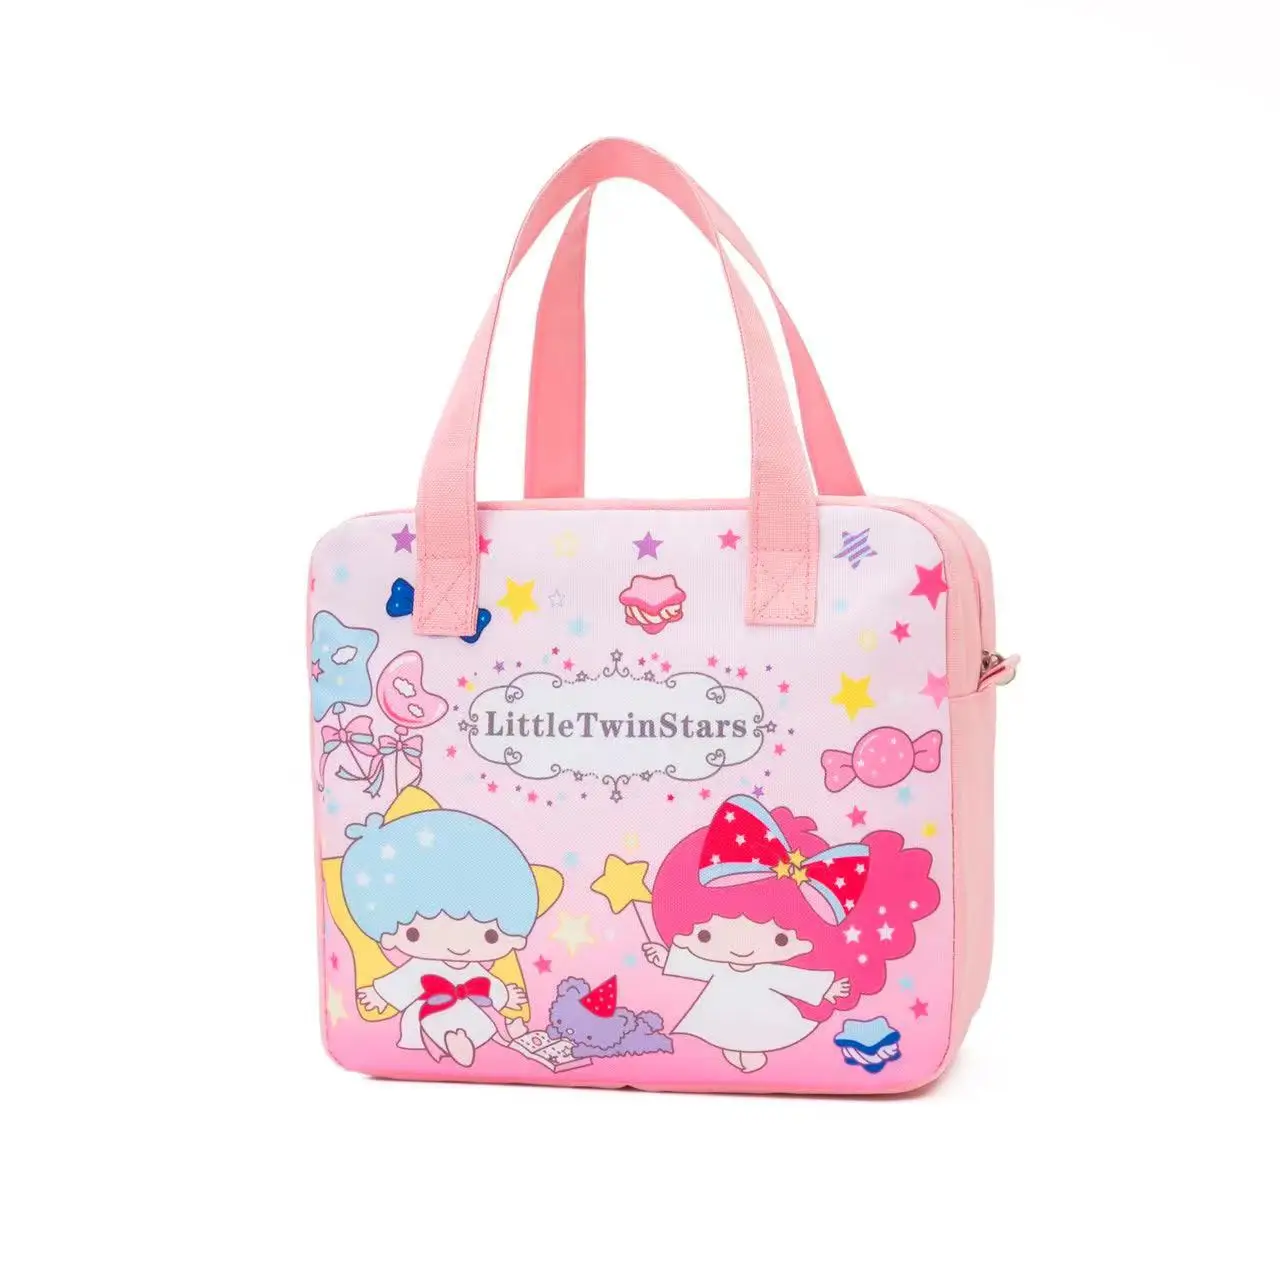 https://ae01.alicdn.com/kf/S4d09022c66b645b485d6fcbe02ab3cd11/Kawaii-Sanrio-cartoon-Hello-Kitty-children-s-portable-portable-lunch-box-bag-lunch-bag-cute-student.jpg